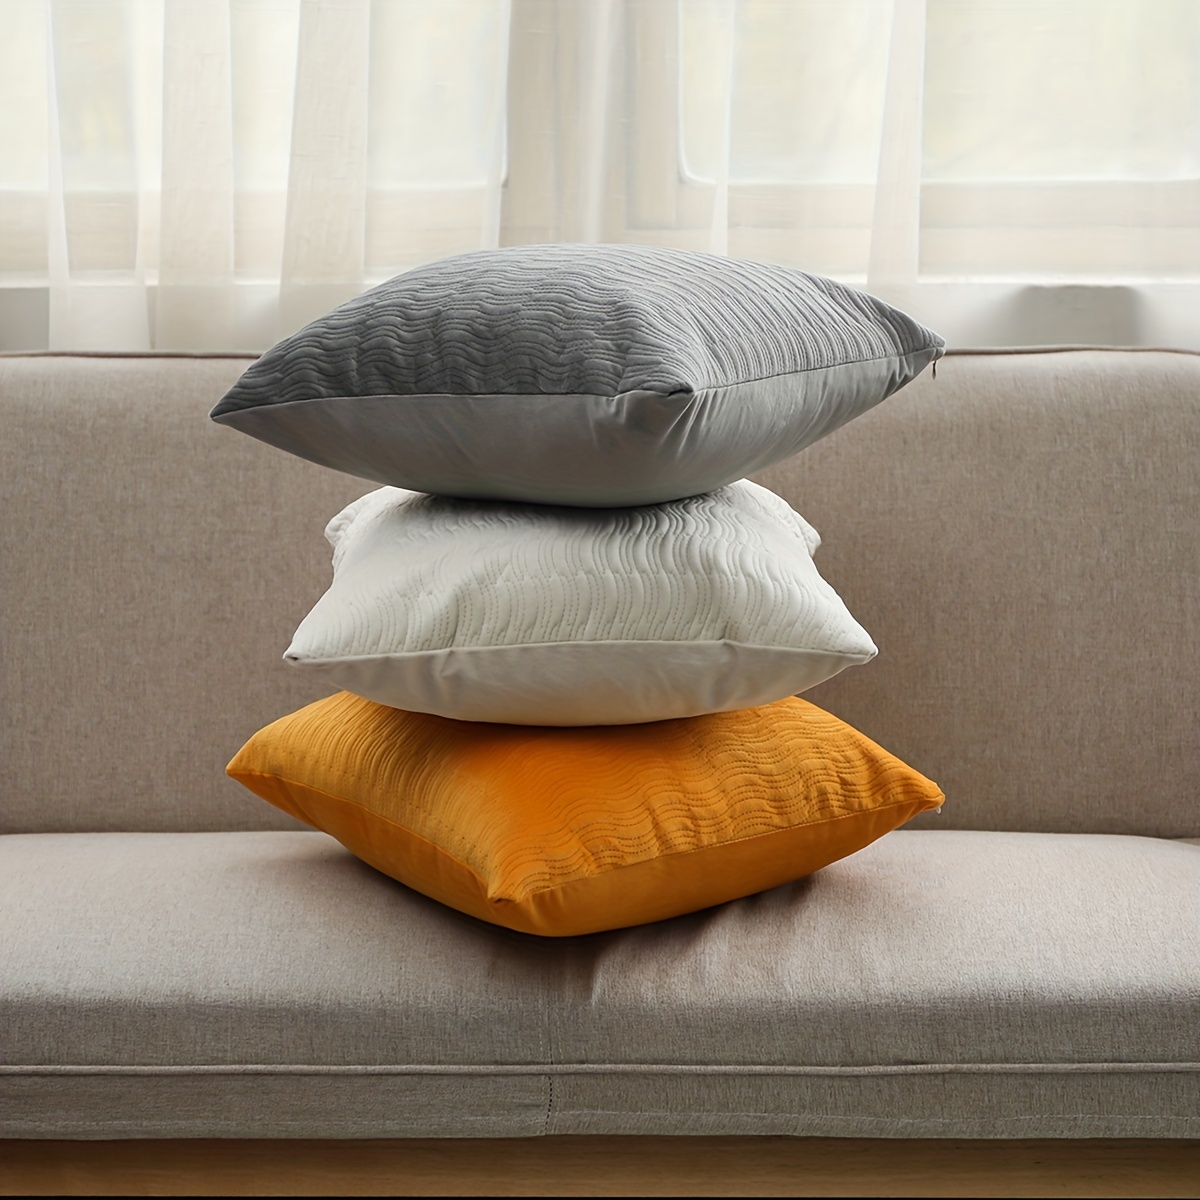 Throw Pillow Cover 18x18 Inch Pleated Decorative Soild Soft Velvet